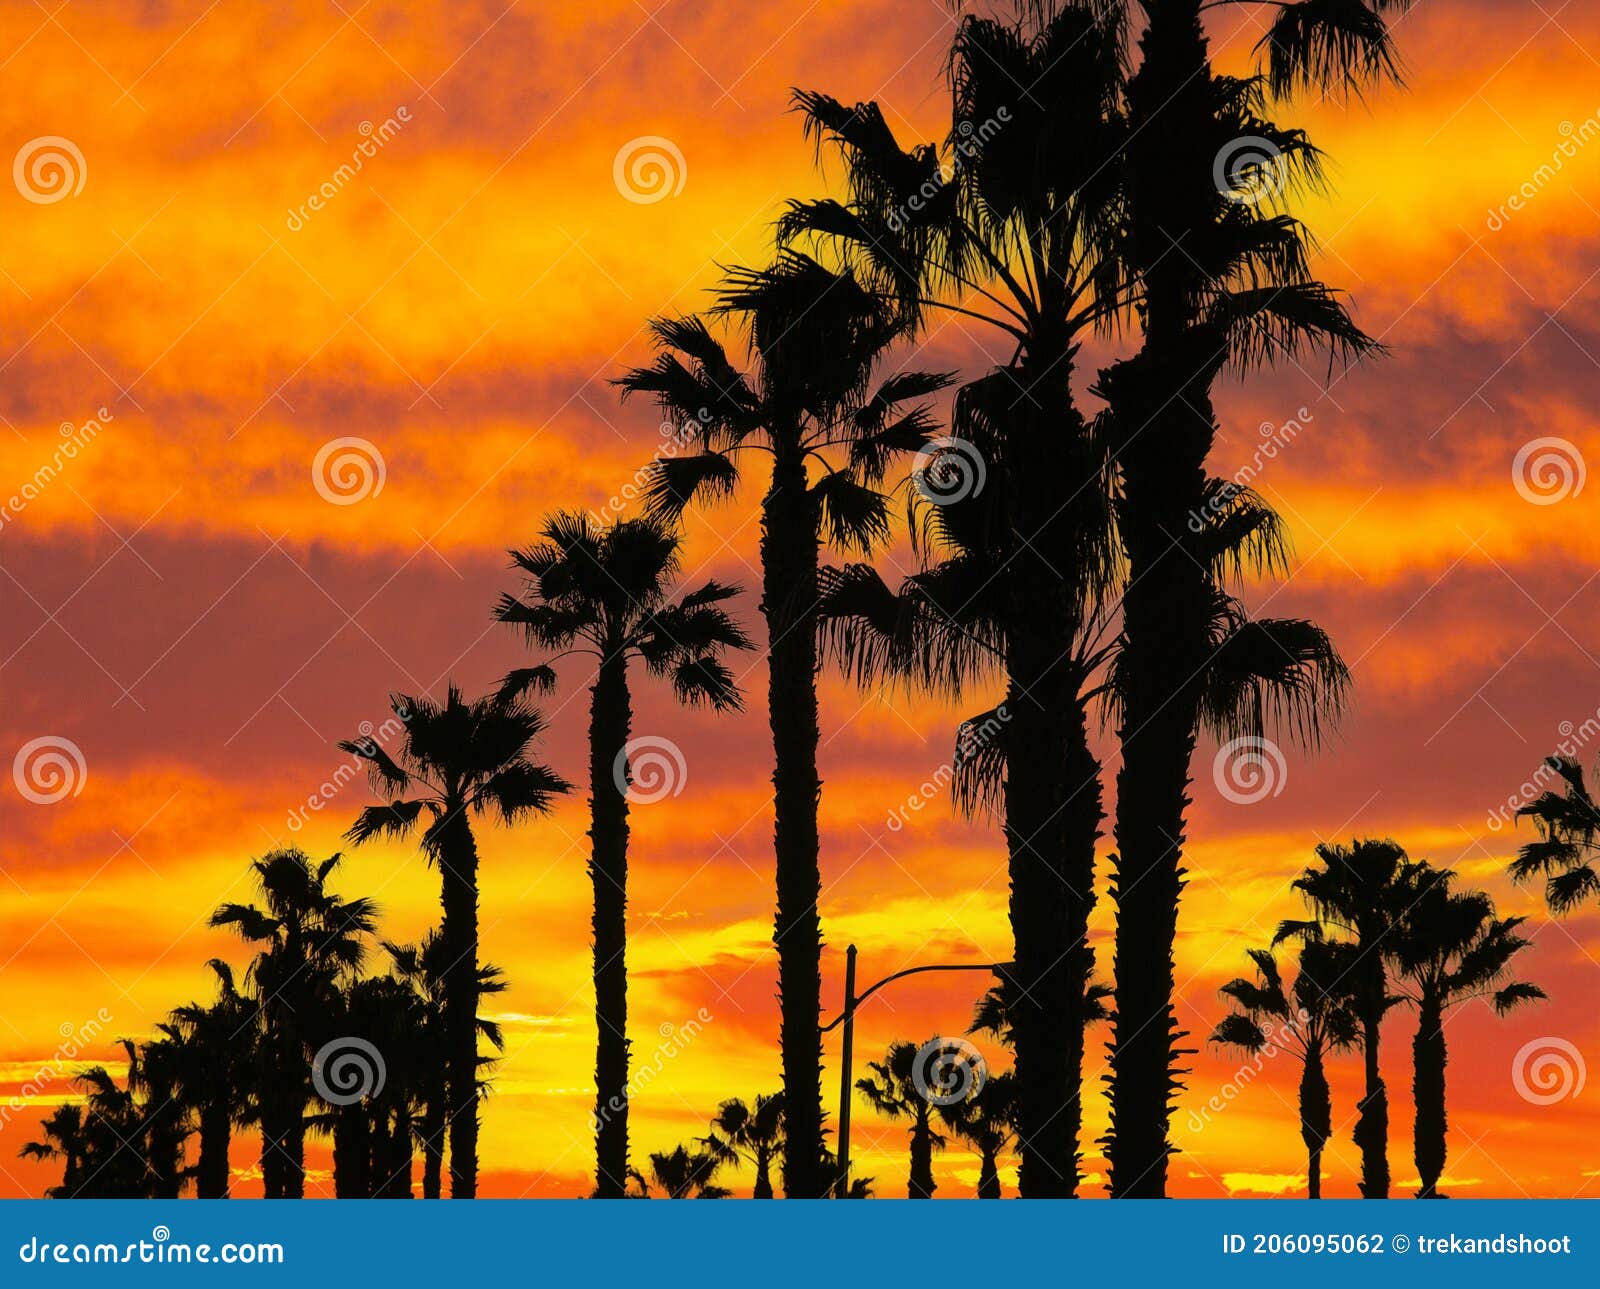 Towering Palm Trees with Orange Sunset Sky Stock Photo - Image of ...